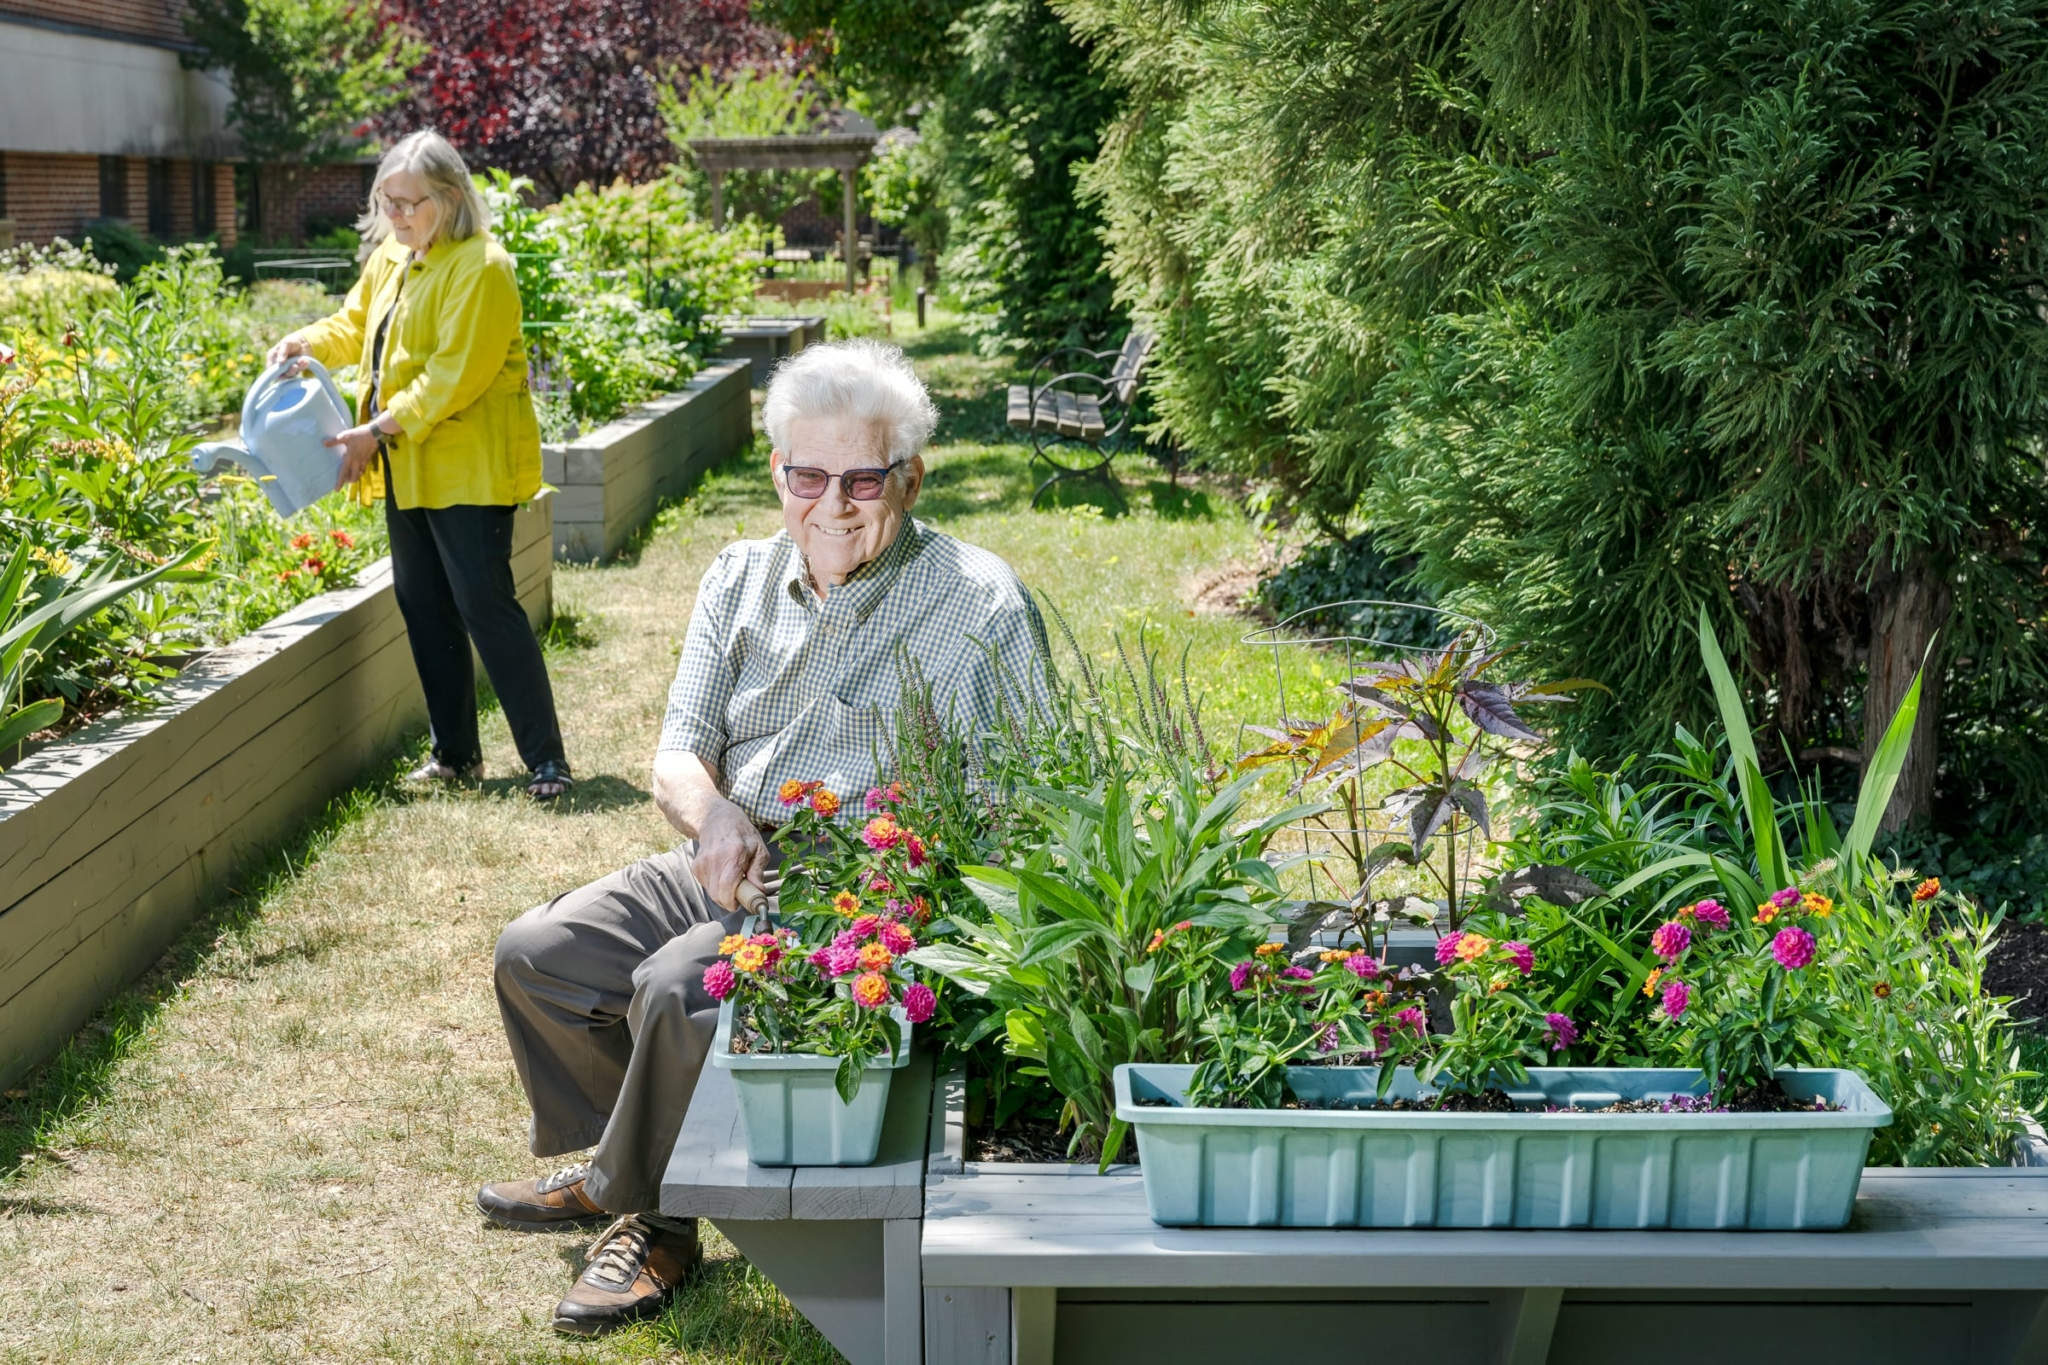 Two seniors enjoying an outdoor garden